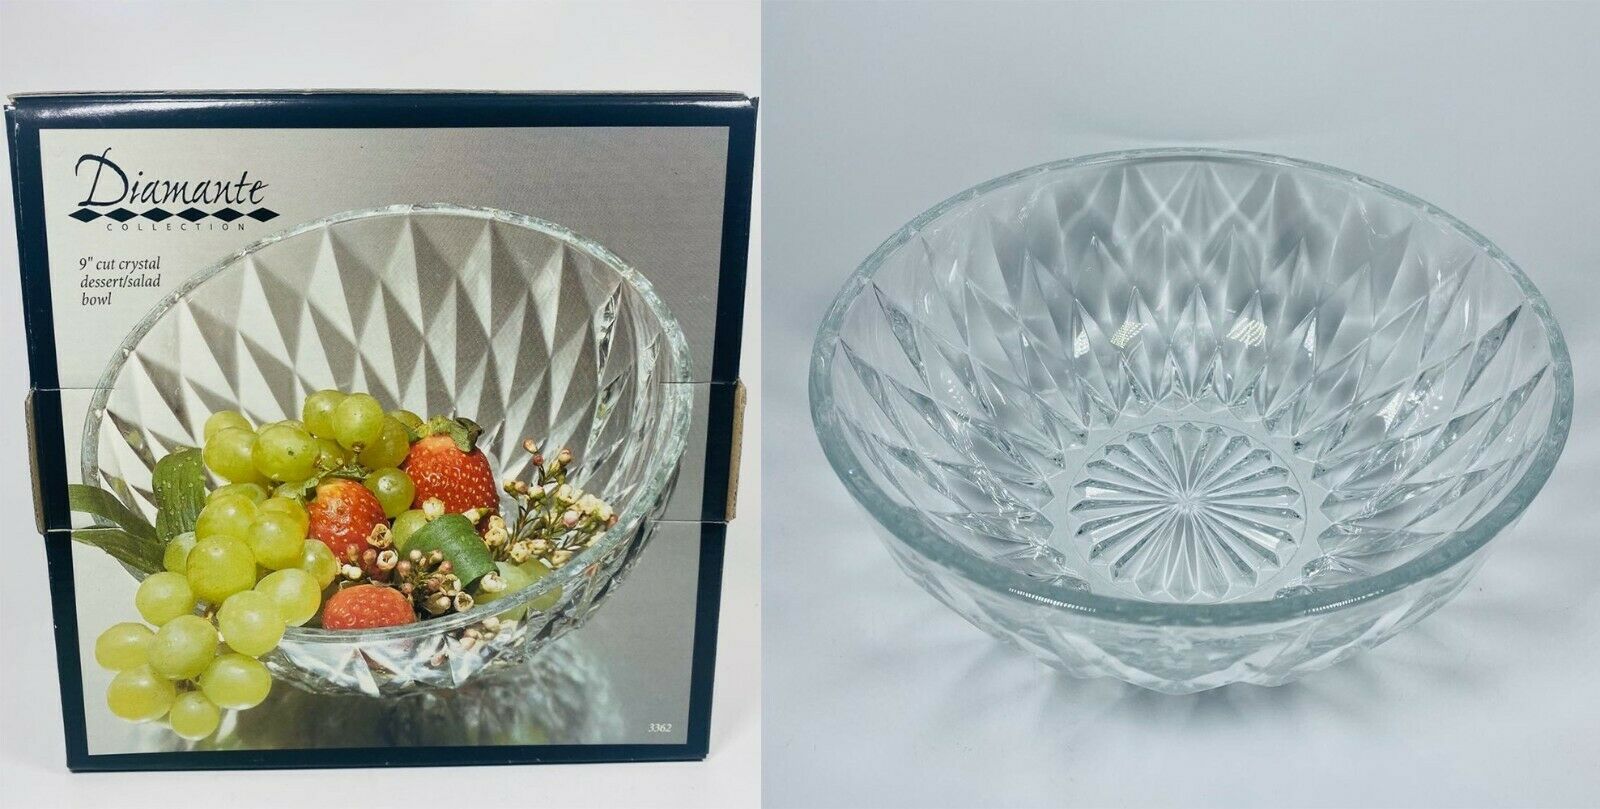 Diamante 9" Cut Crystal Dessert/Salad Bowl - $34.54